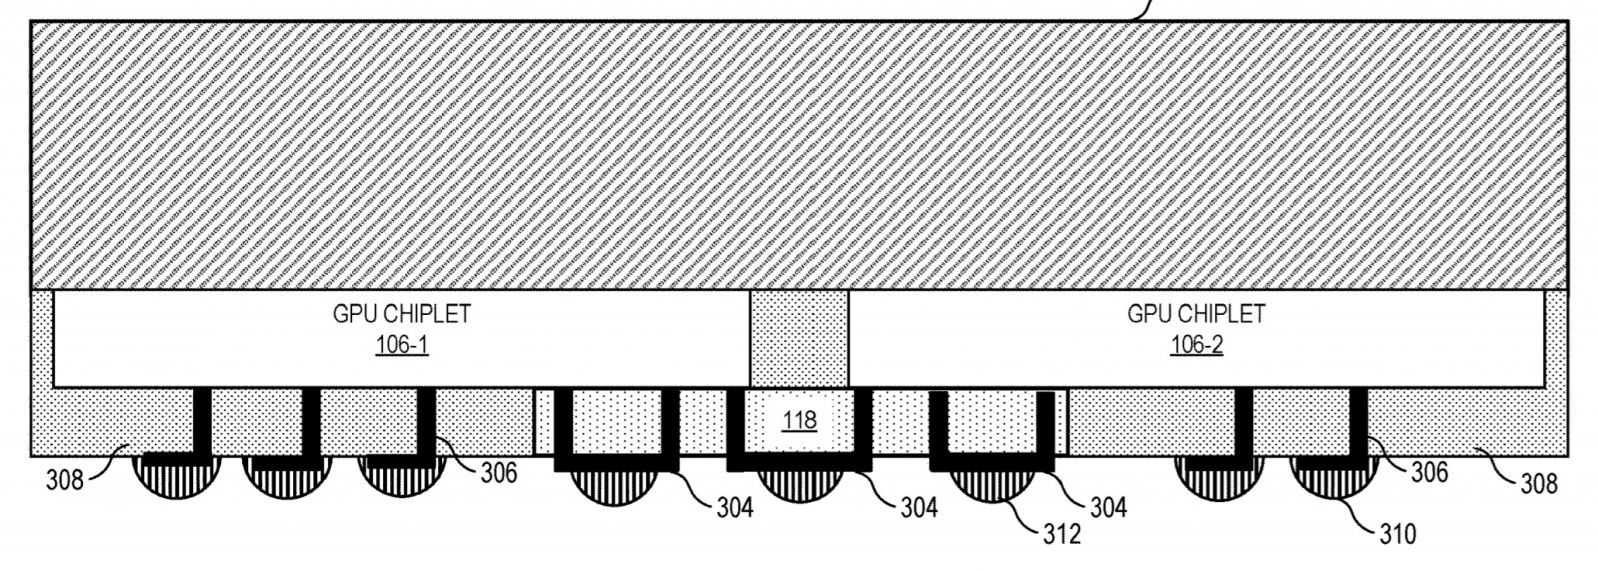 AMD-Active-Bridge-Chiplet-Patent-Fig3.jpg